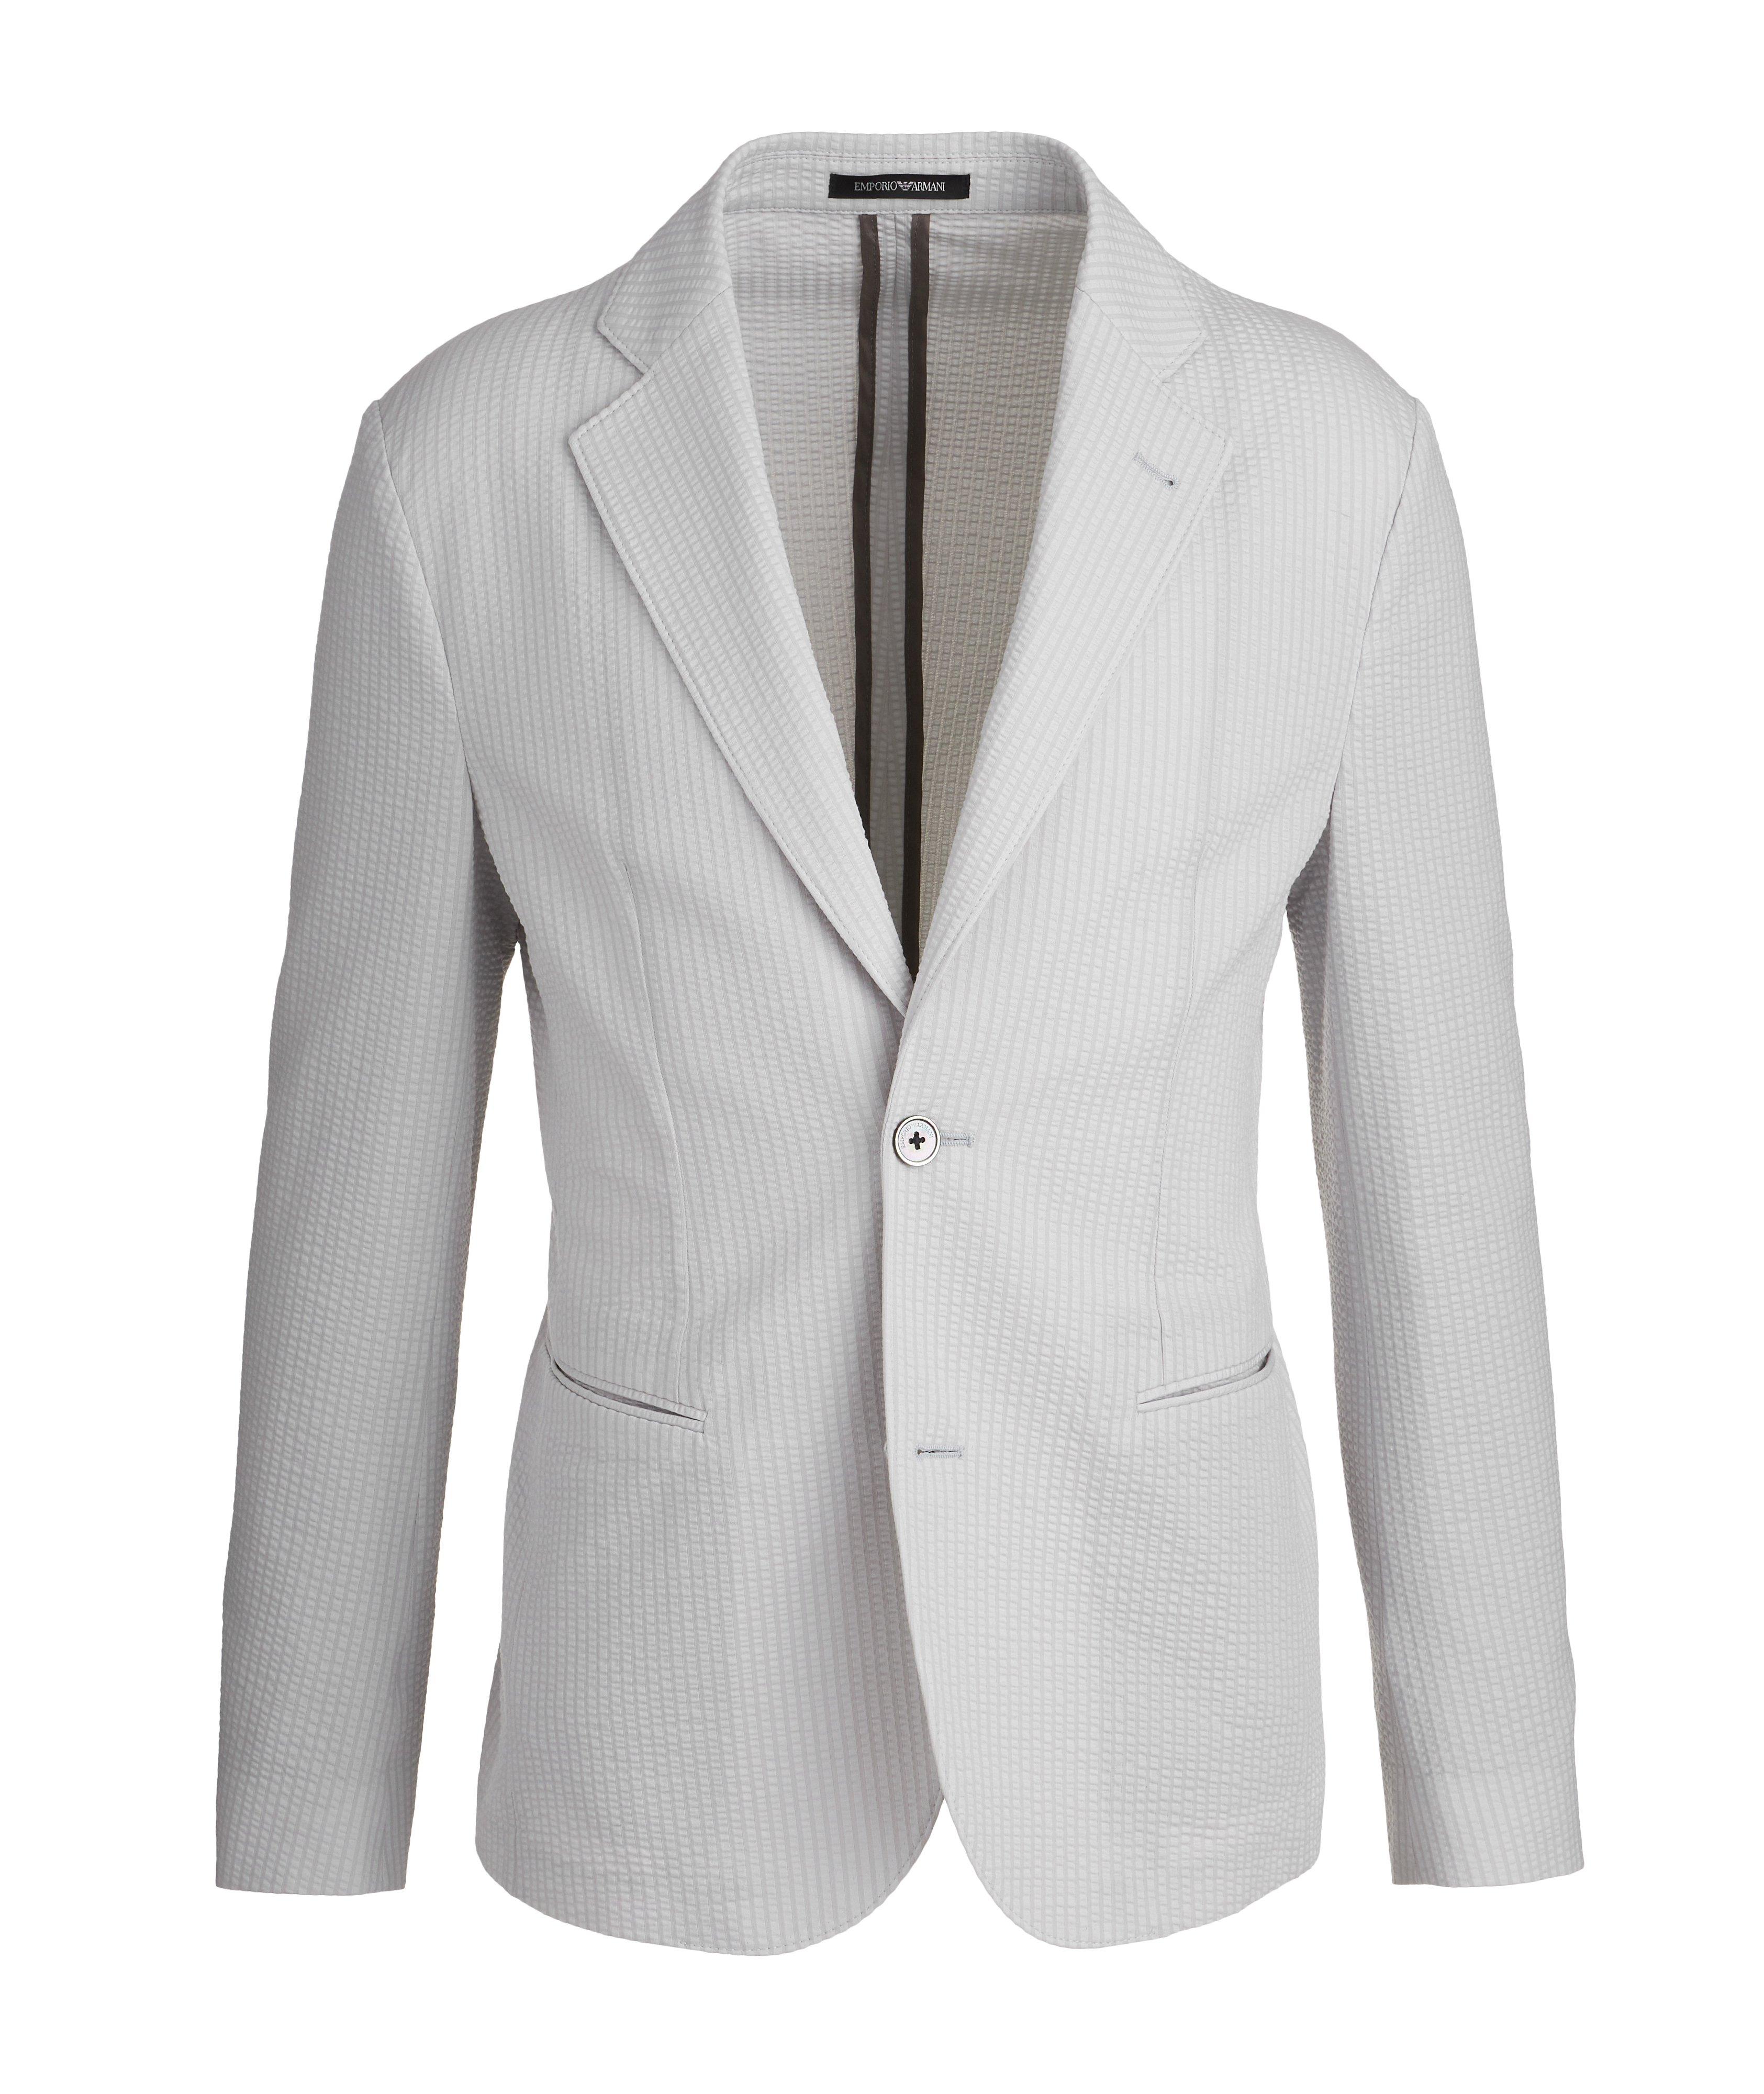 Unstructured Cotton-Blend Sports Jacket image 0